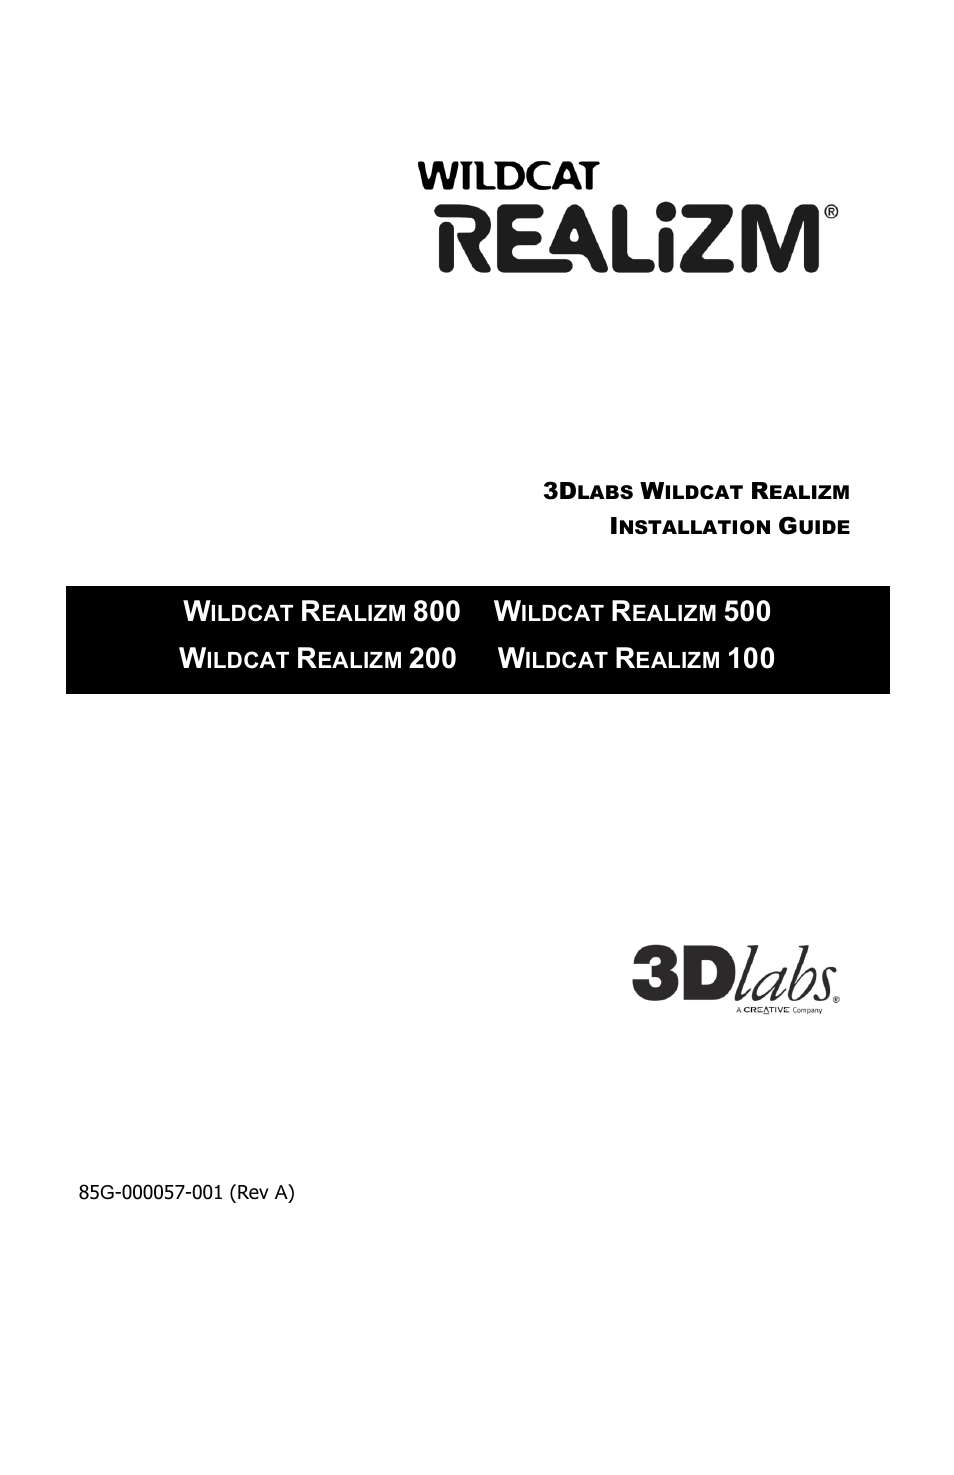 WILDCAT REALIZM 500